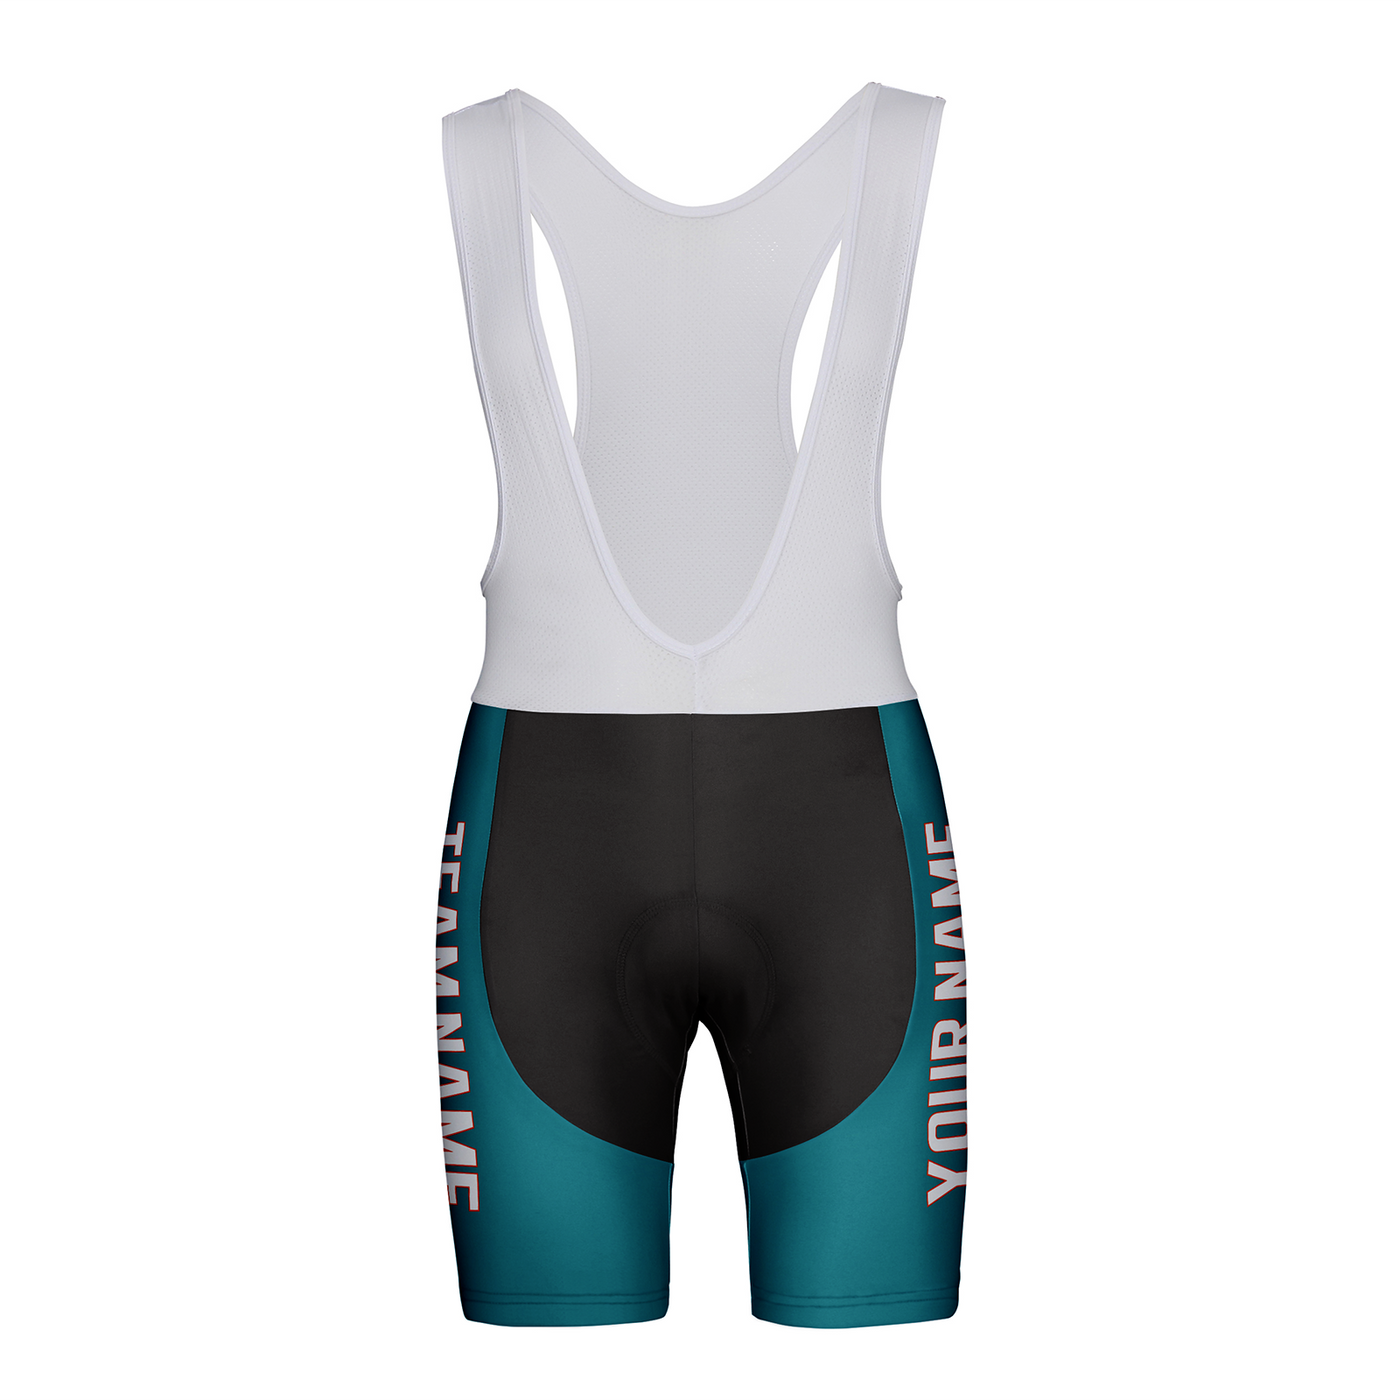 Customized Miami Team Unisex Cycling Bib Shorts